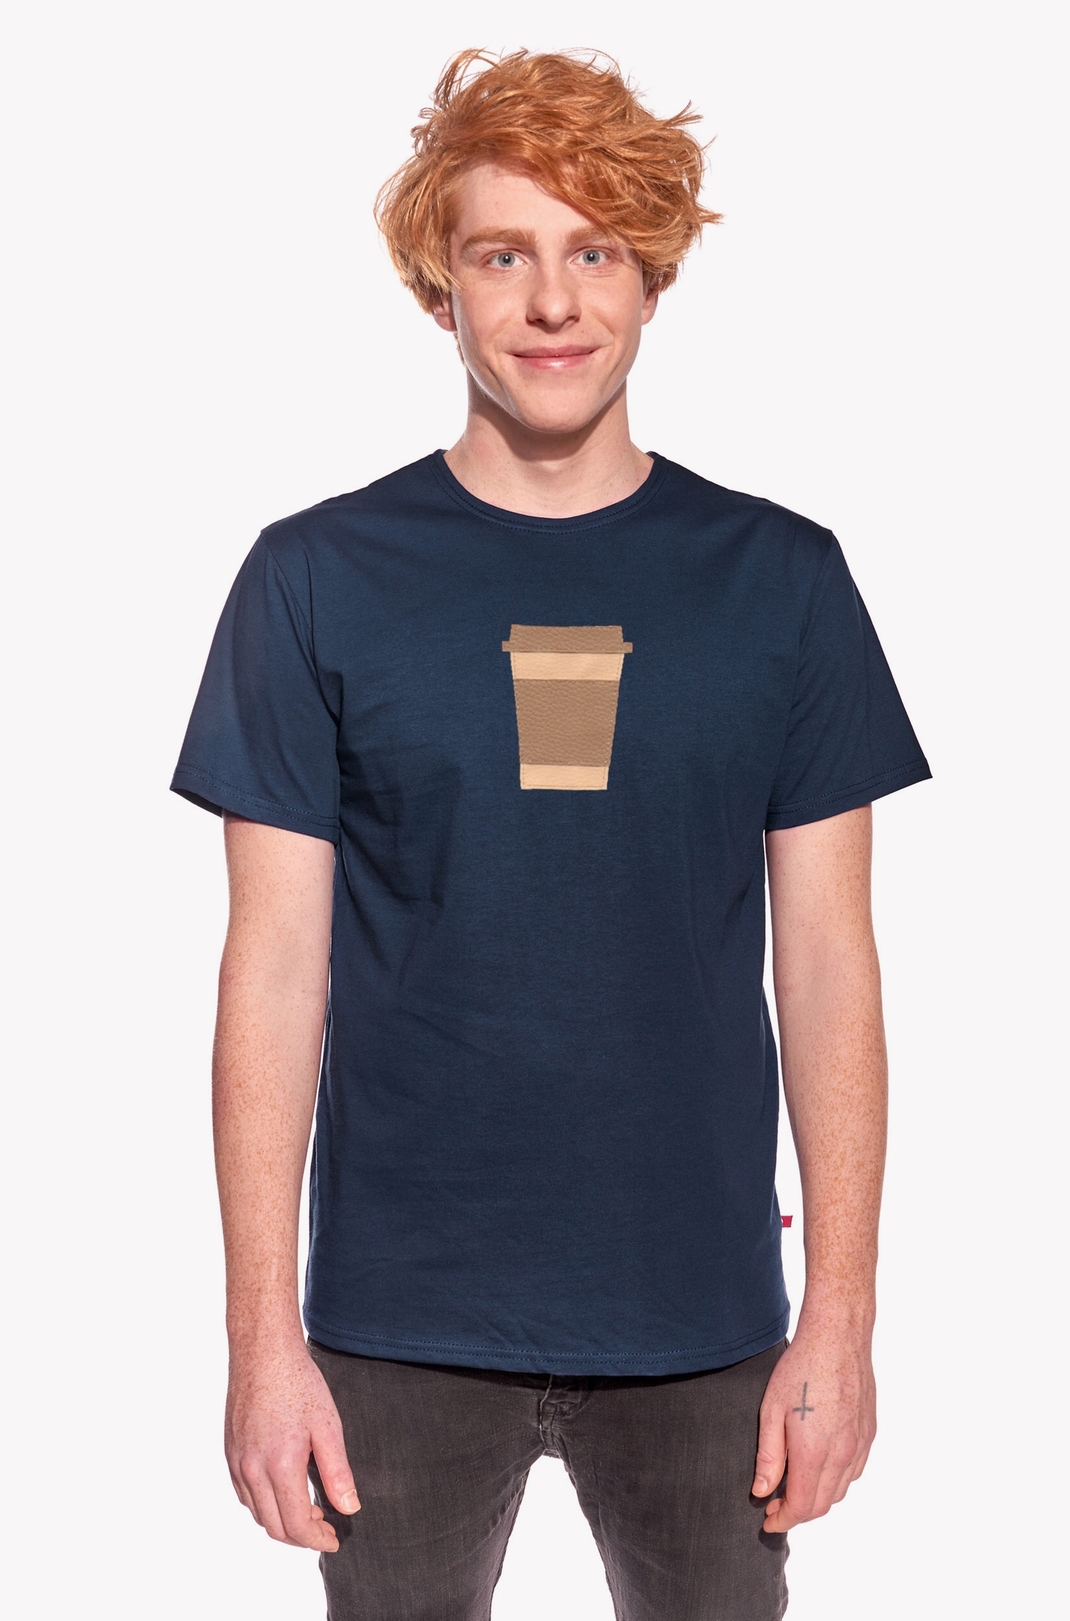 Tričko s kávou